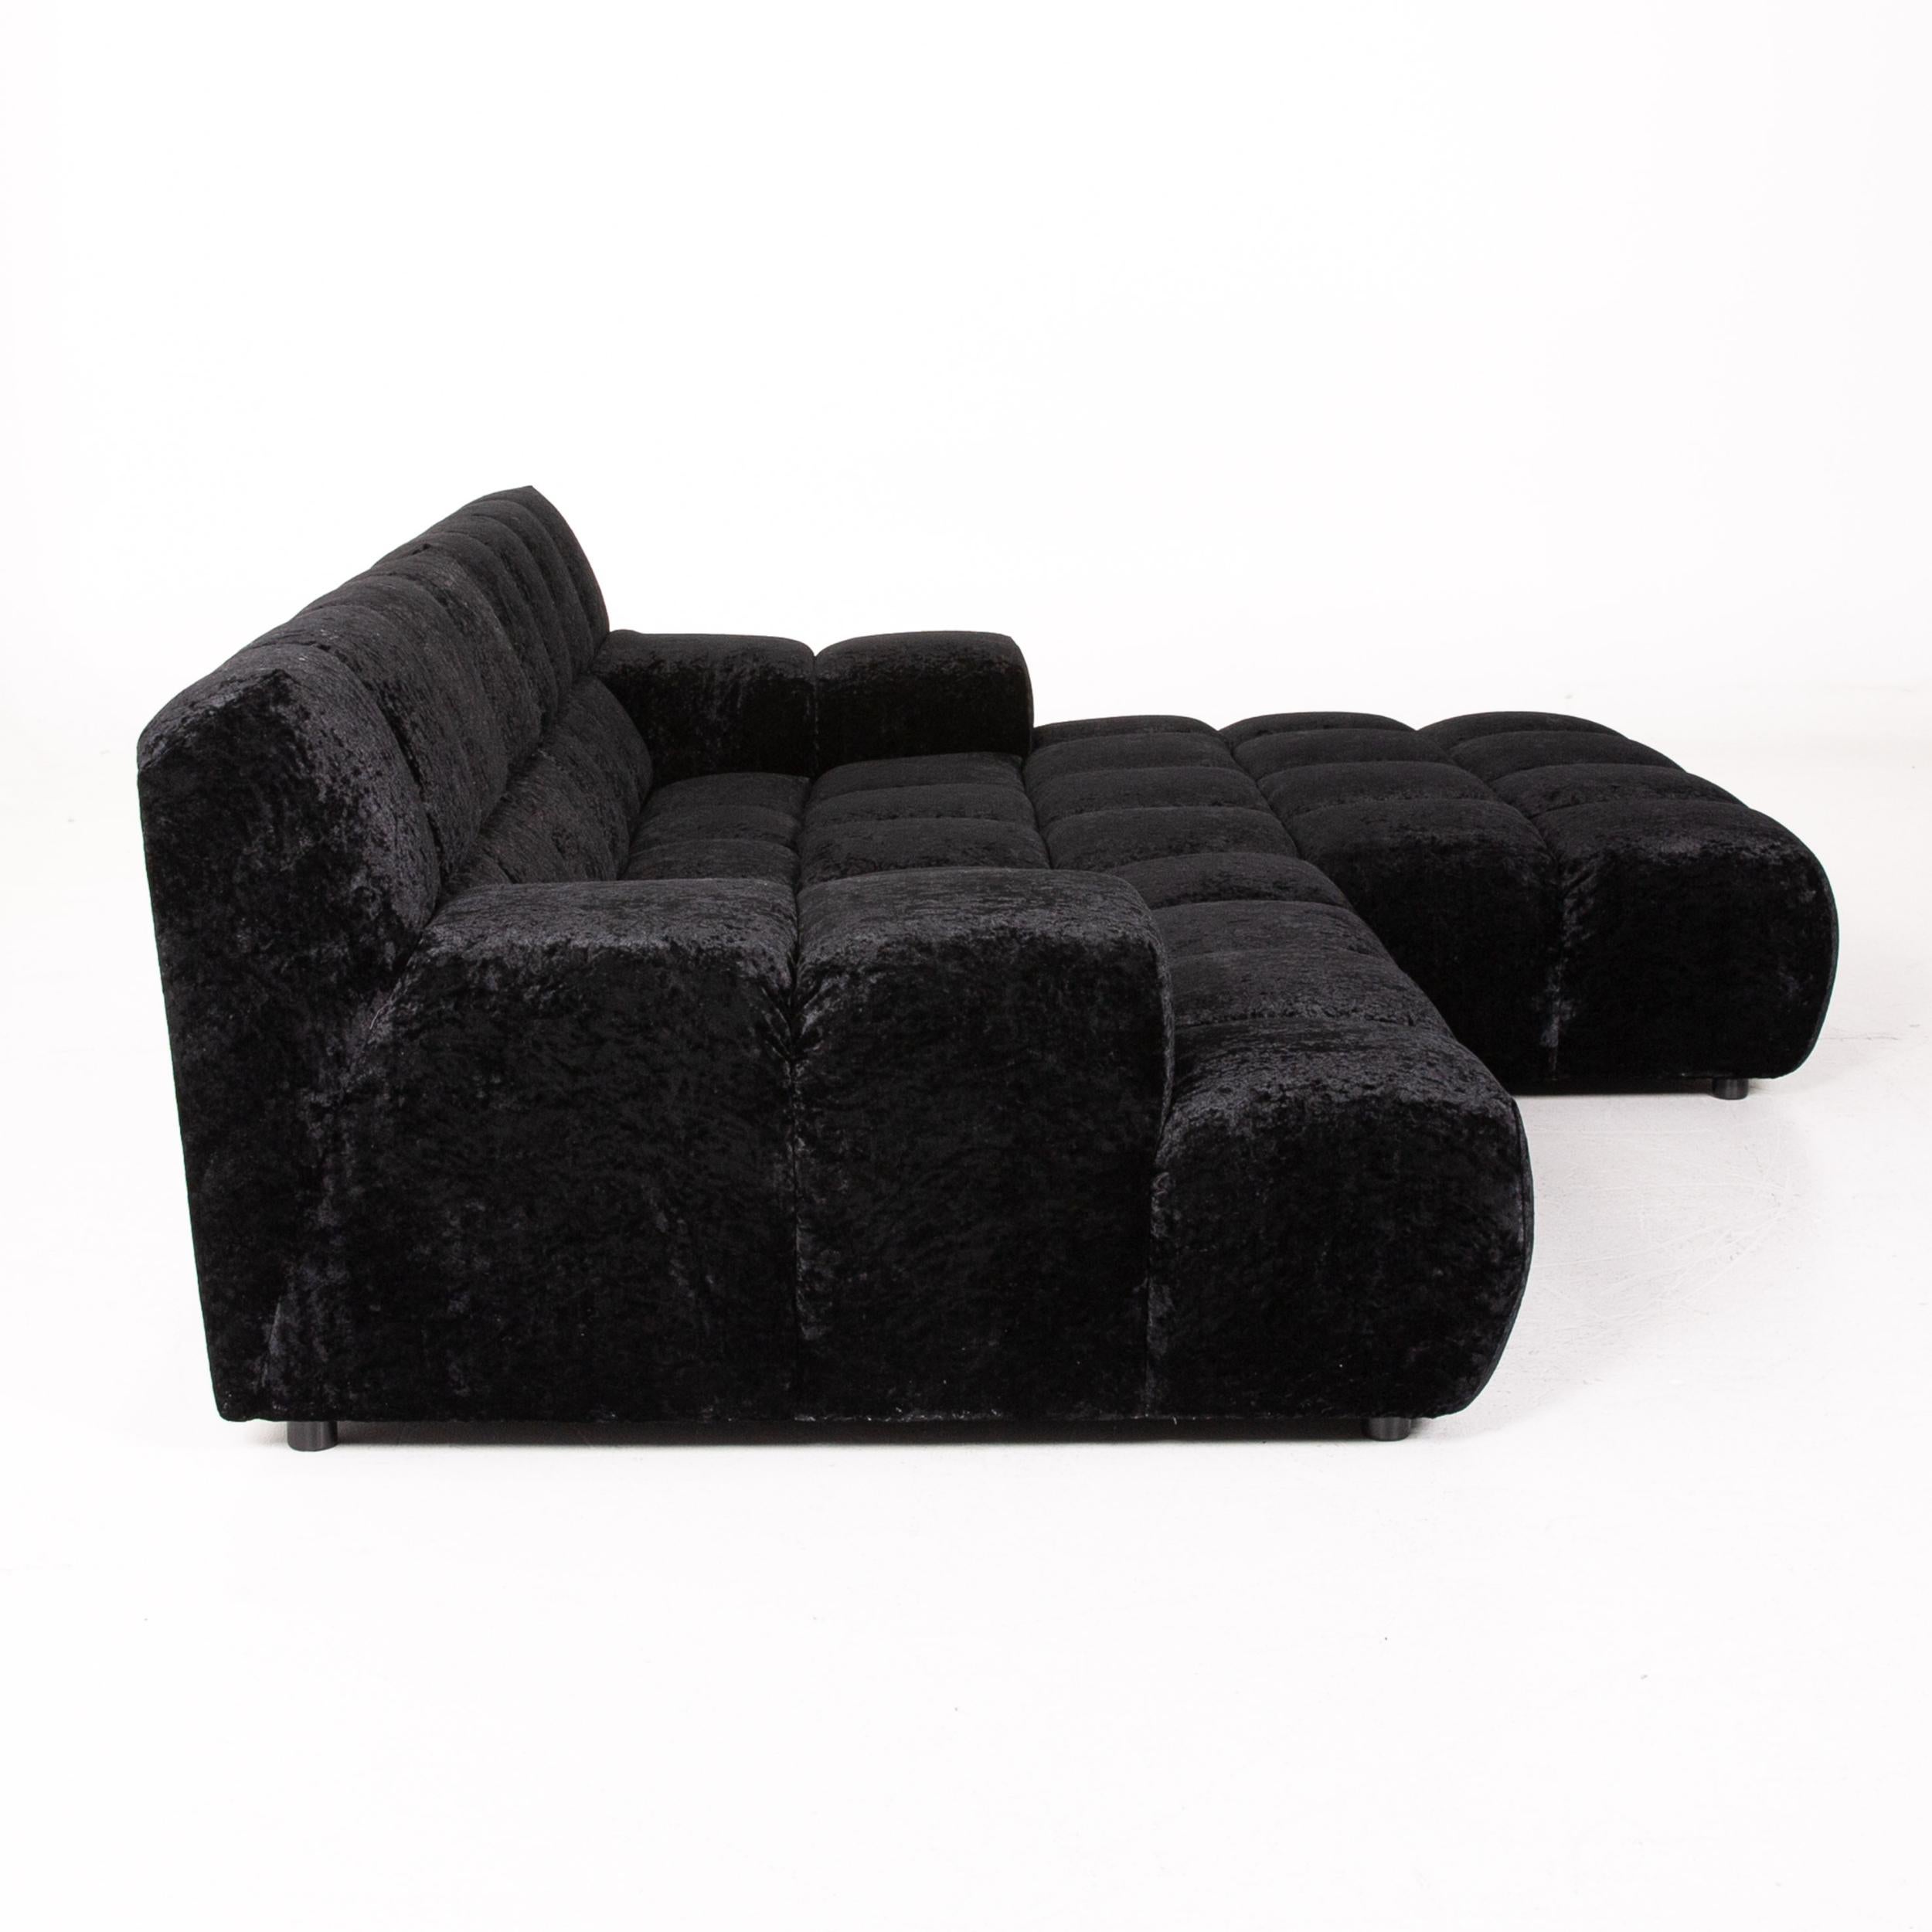 Bretz Ocean 7 Velvet Fabric Corner Sofa Black Sofa Couch Modular 2